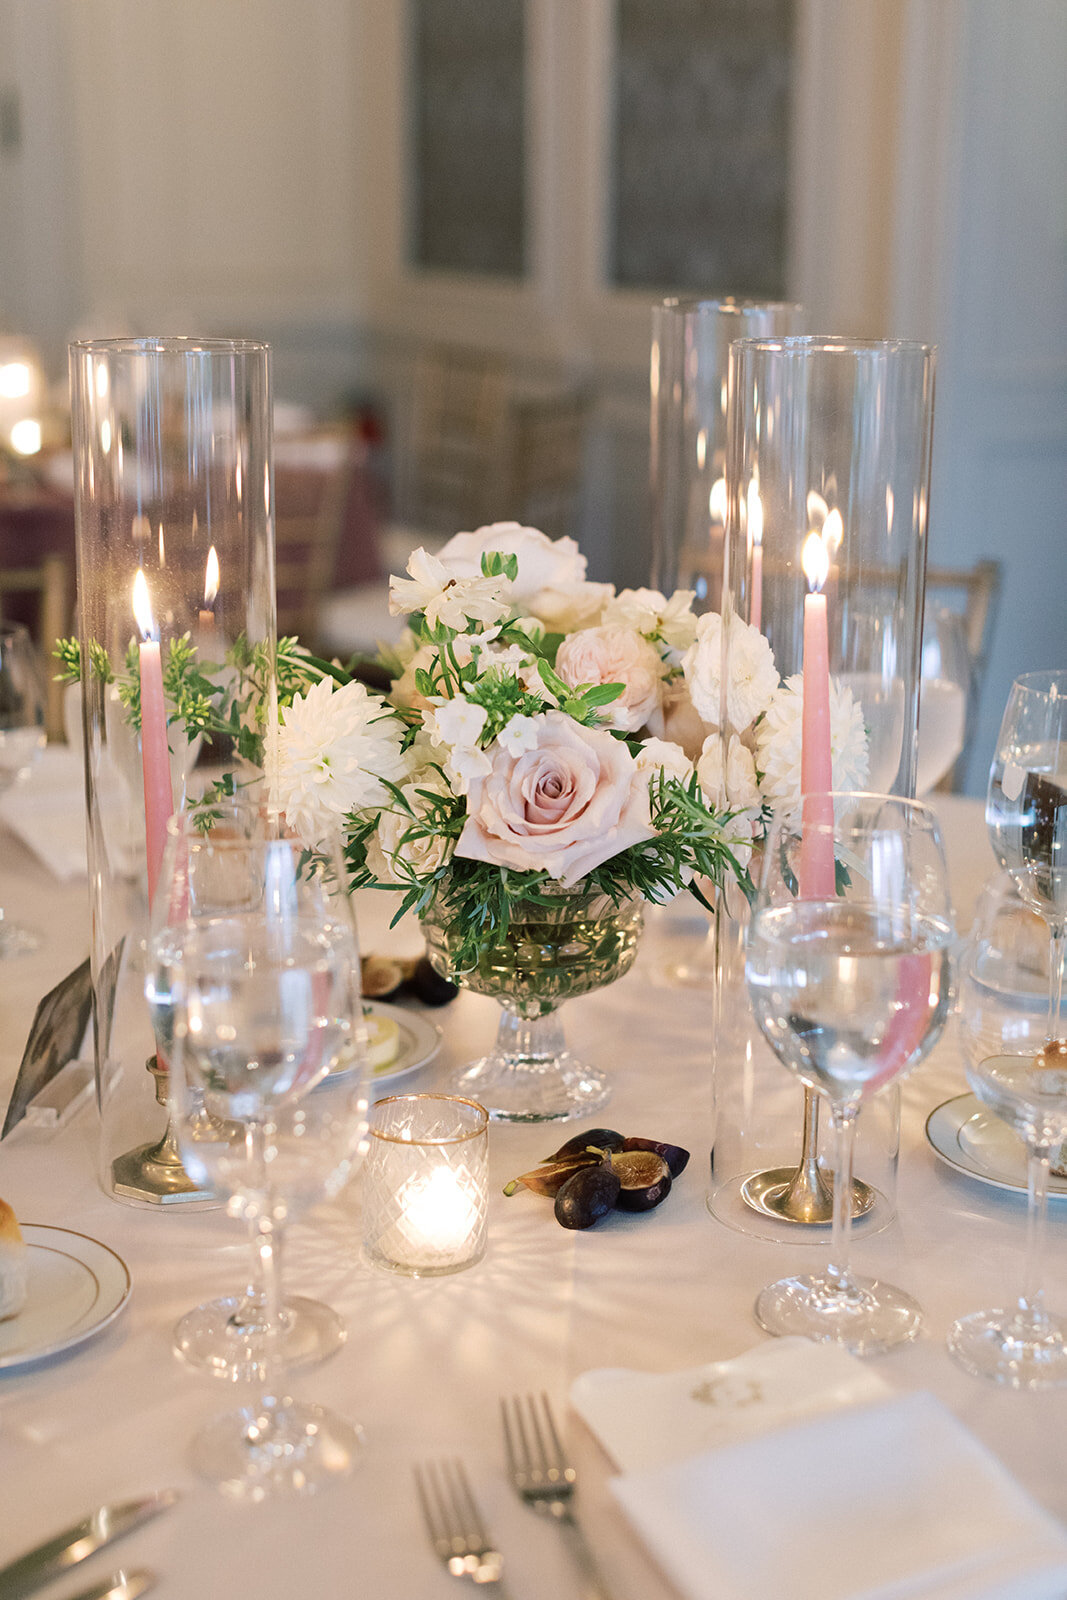 Glen Manor House Wedding Reception Floral Centerpieces - Cru and Co